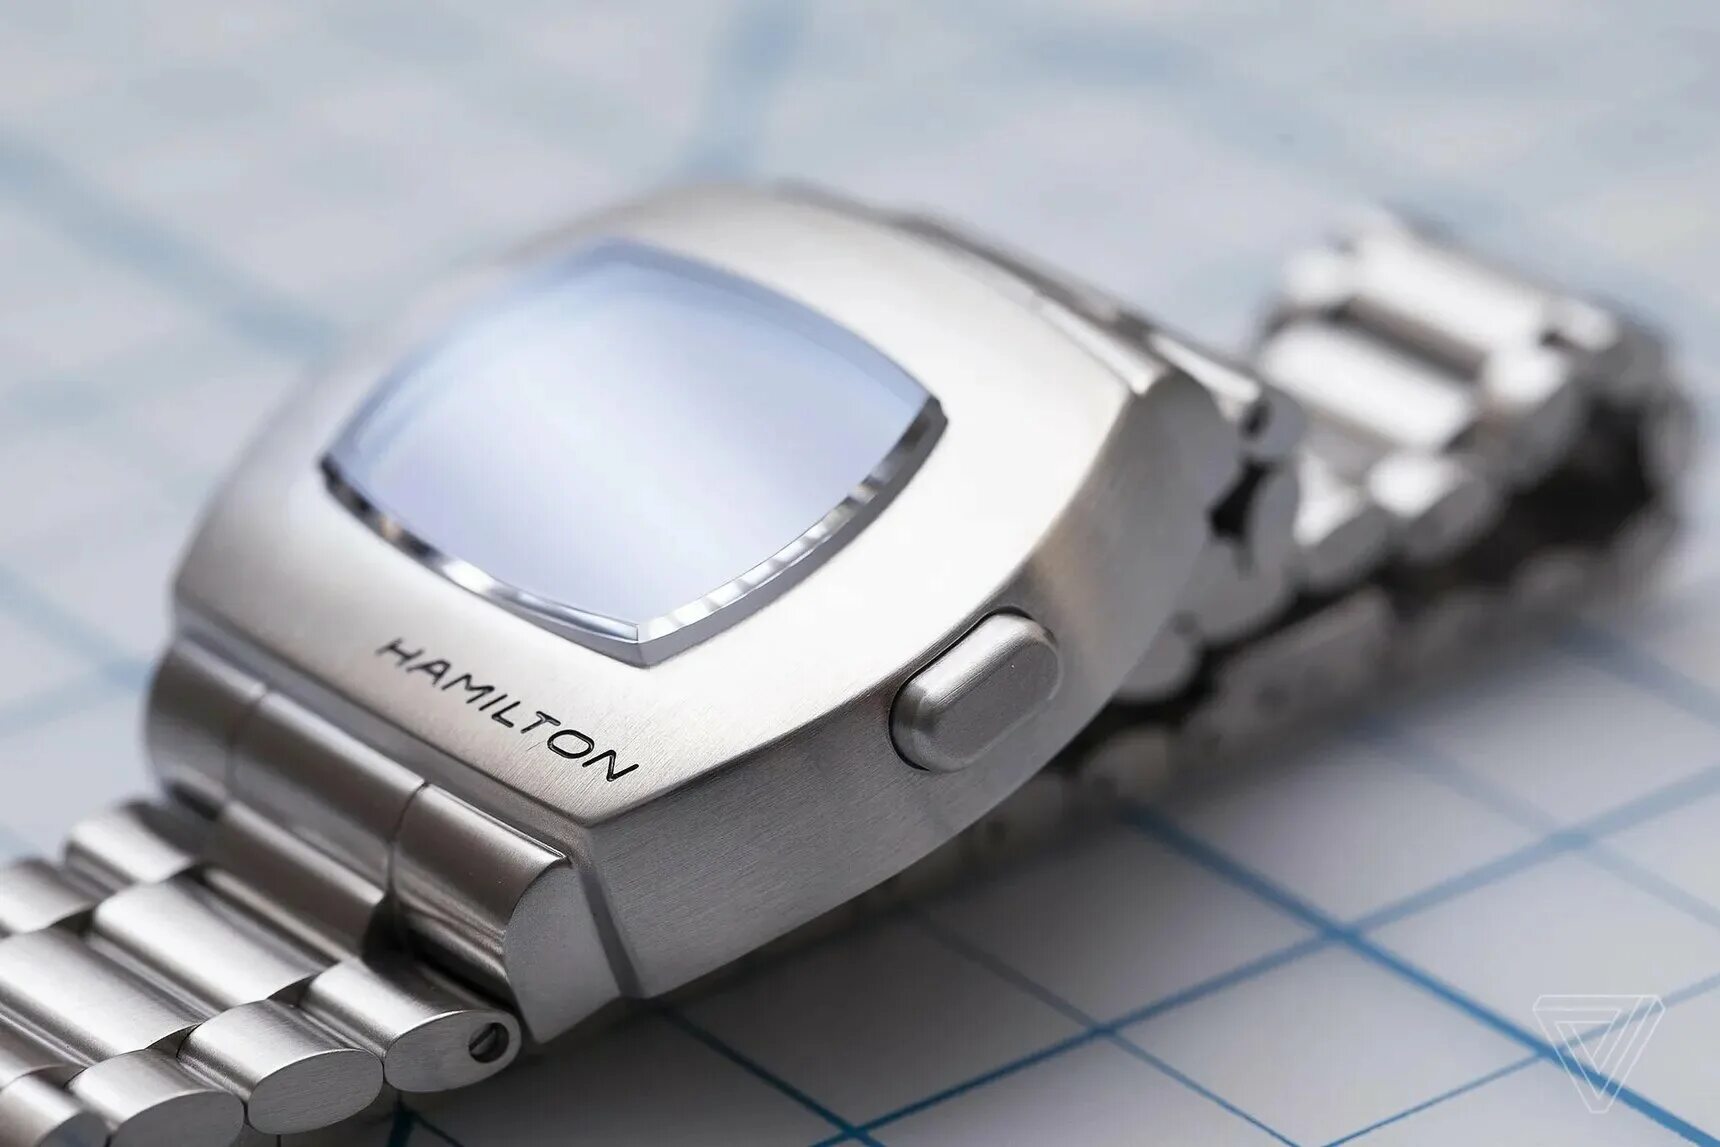 Кнопка 1 час. Часы Hamilton PSR. Pulsar Digital watch. Hamilton Pulsar Style watch. Кнопка часы (РП-271).